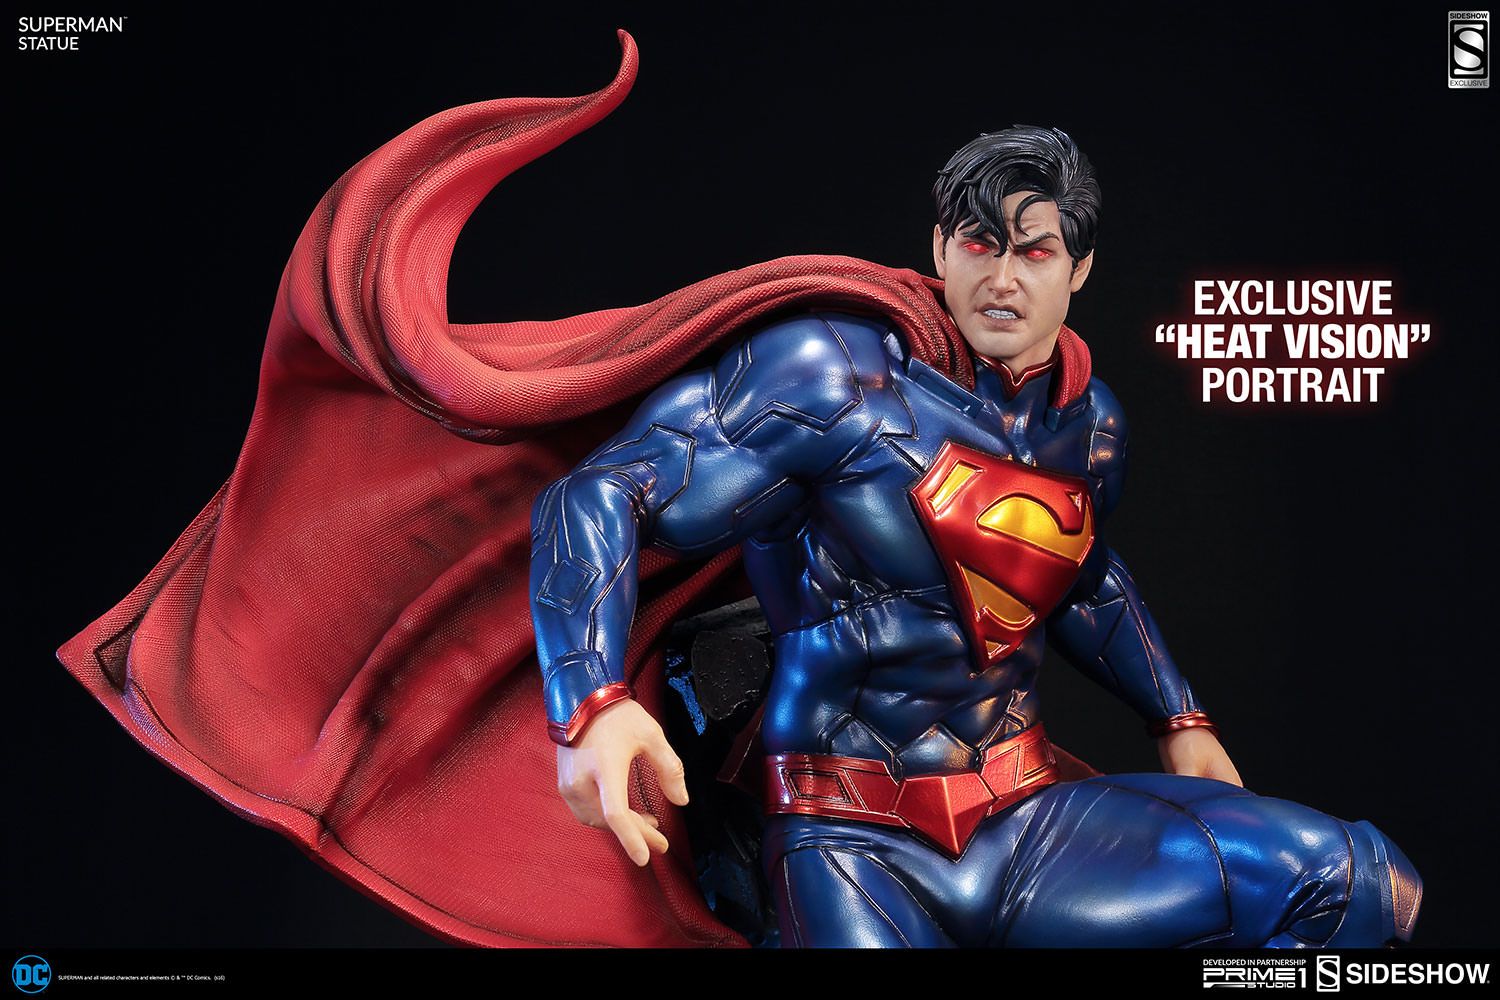 dc-comics-the-new-52-superman-statue-prime1